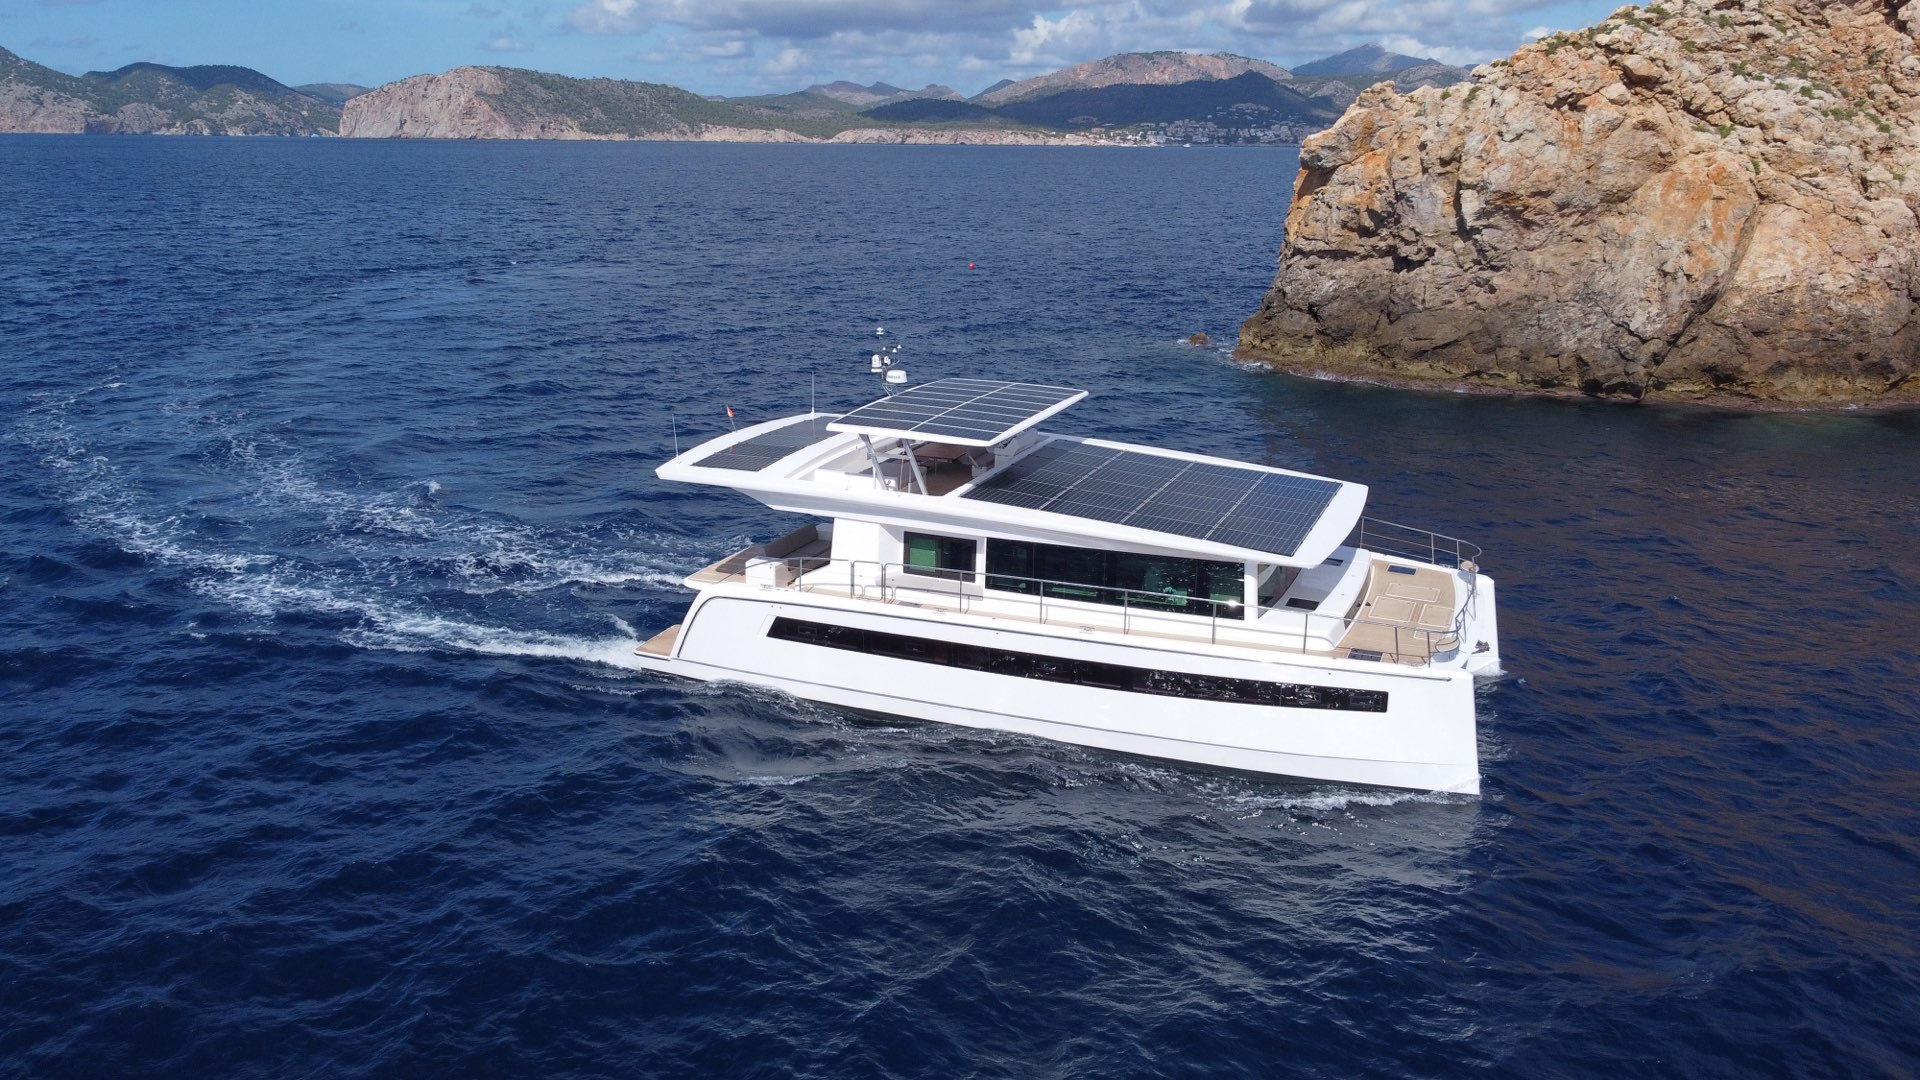 solar yachts australia